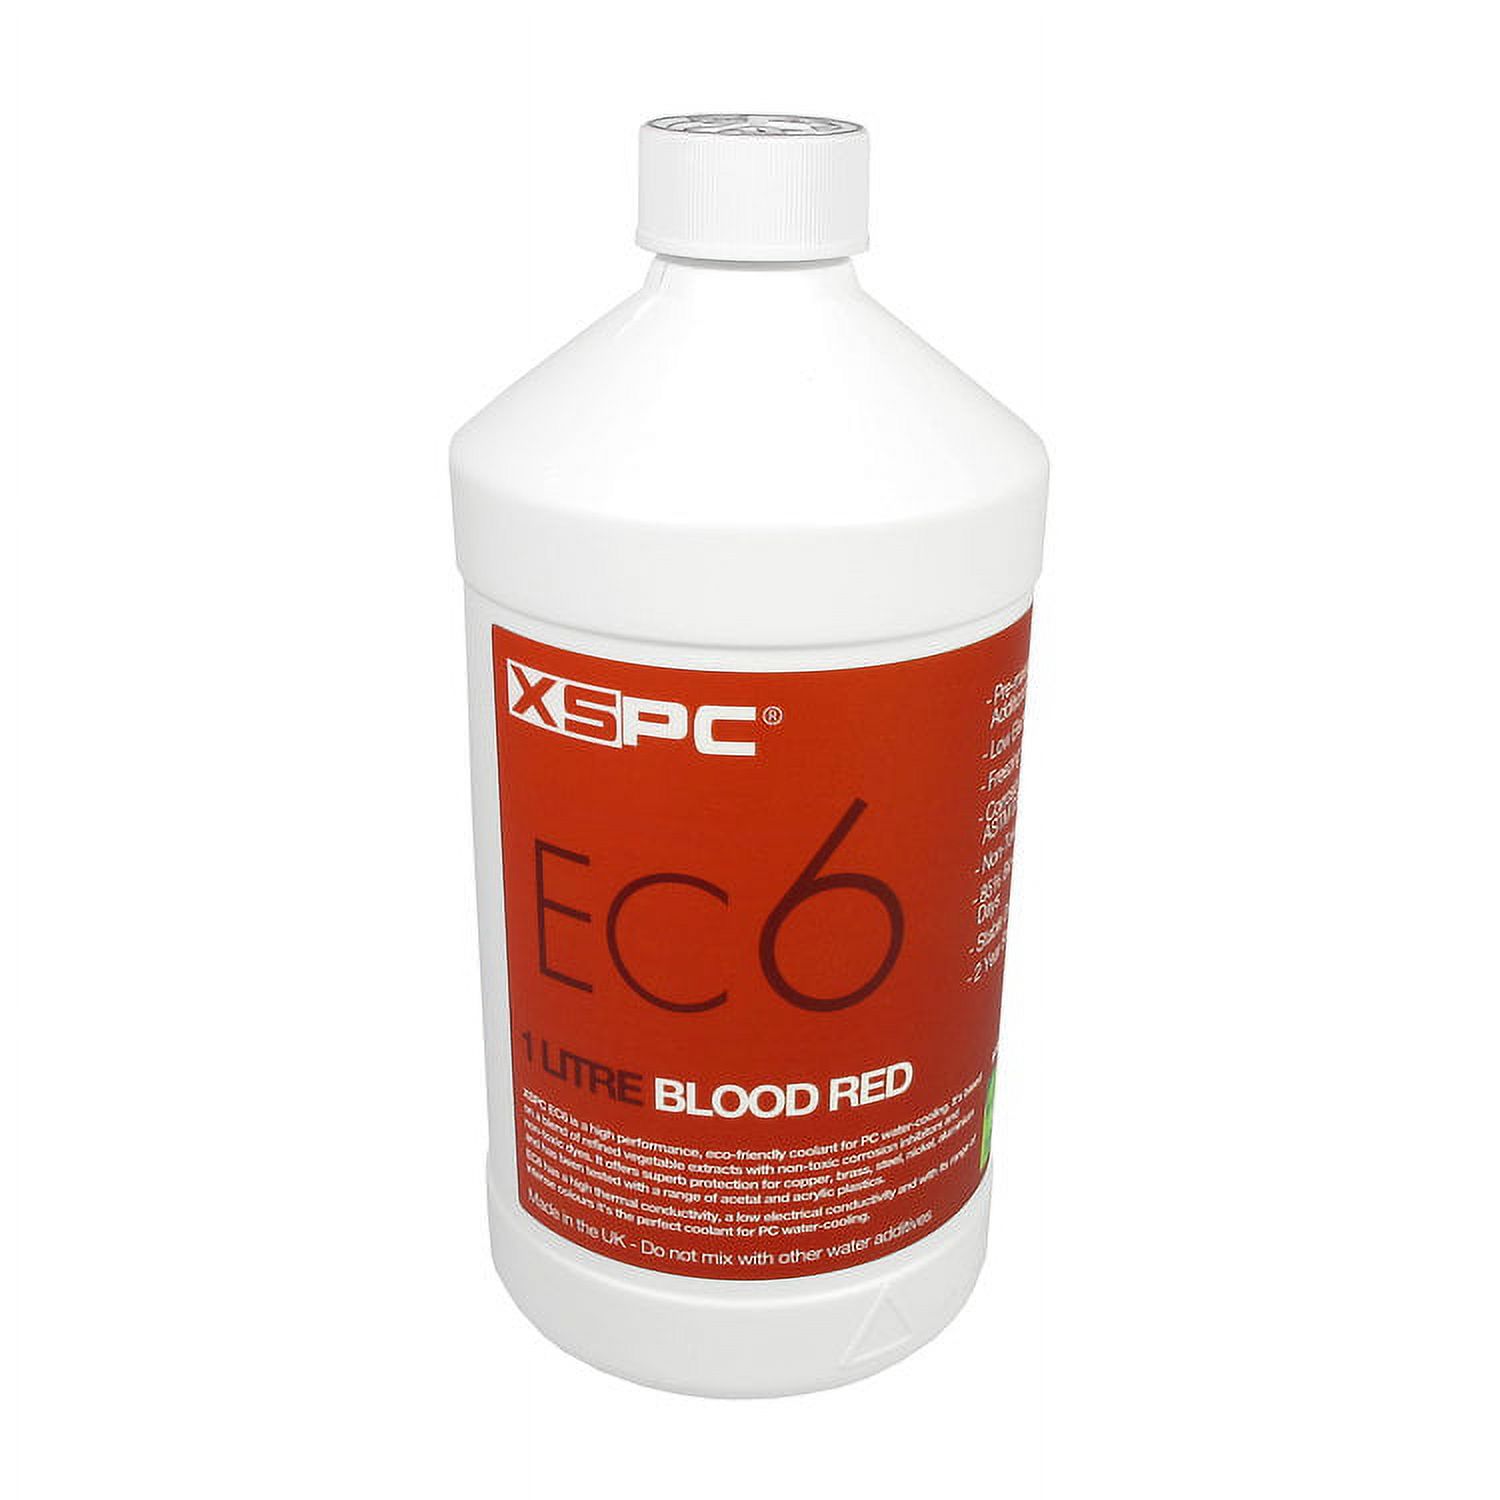 XSPC EC6 High Performance Premix PC Coolant, Translucent, 1000 mL, Blood Red - image 1 of 4